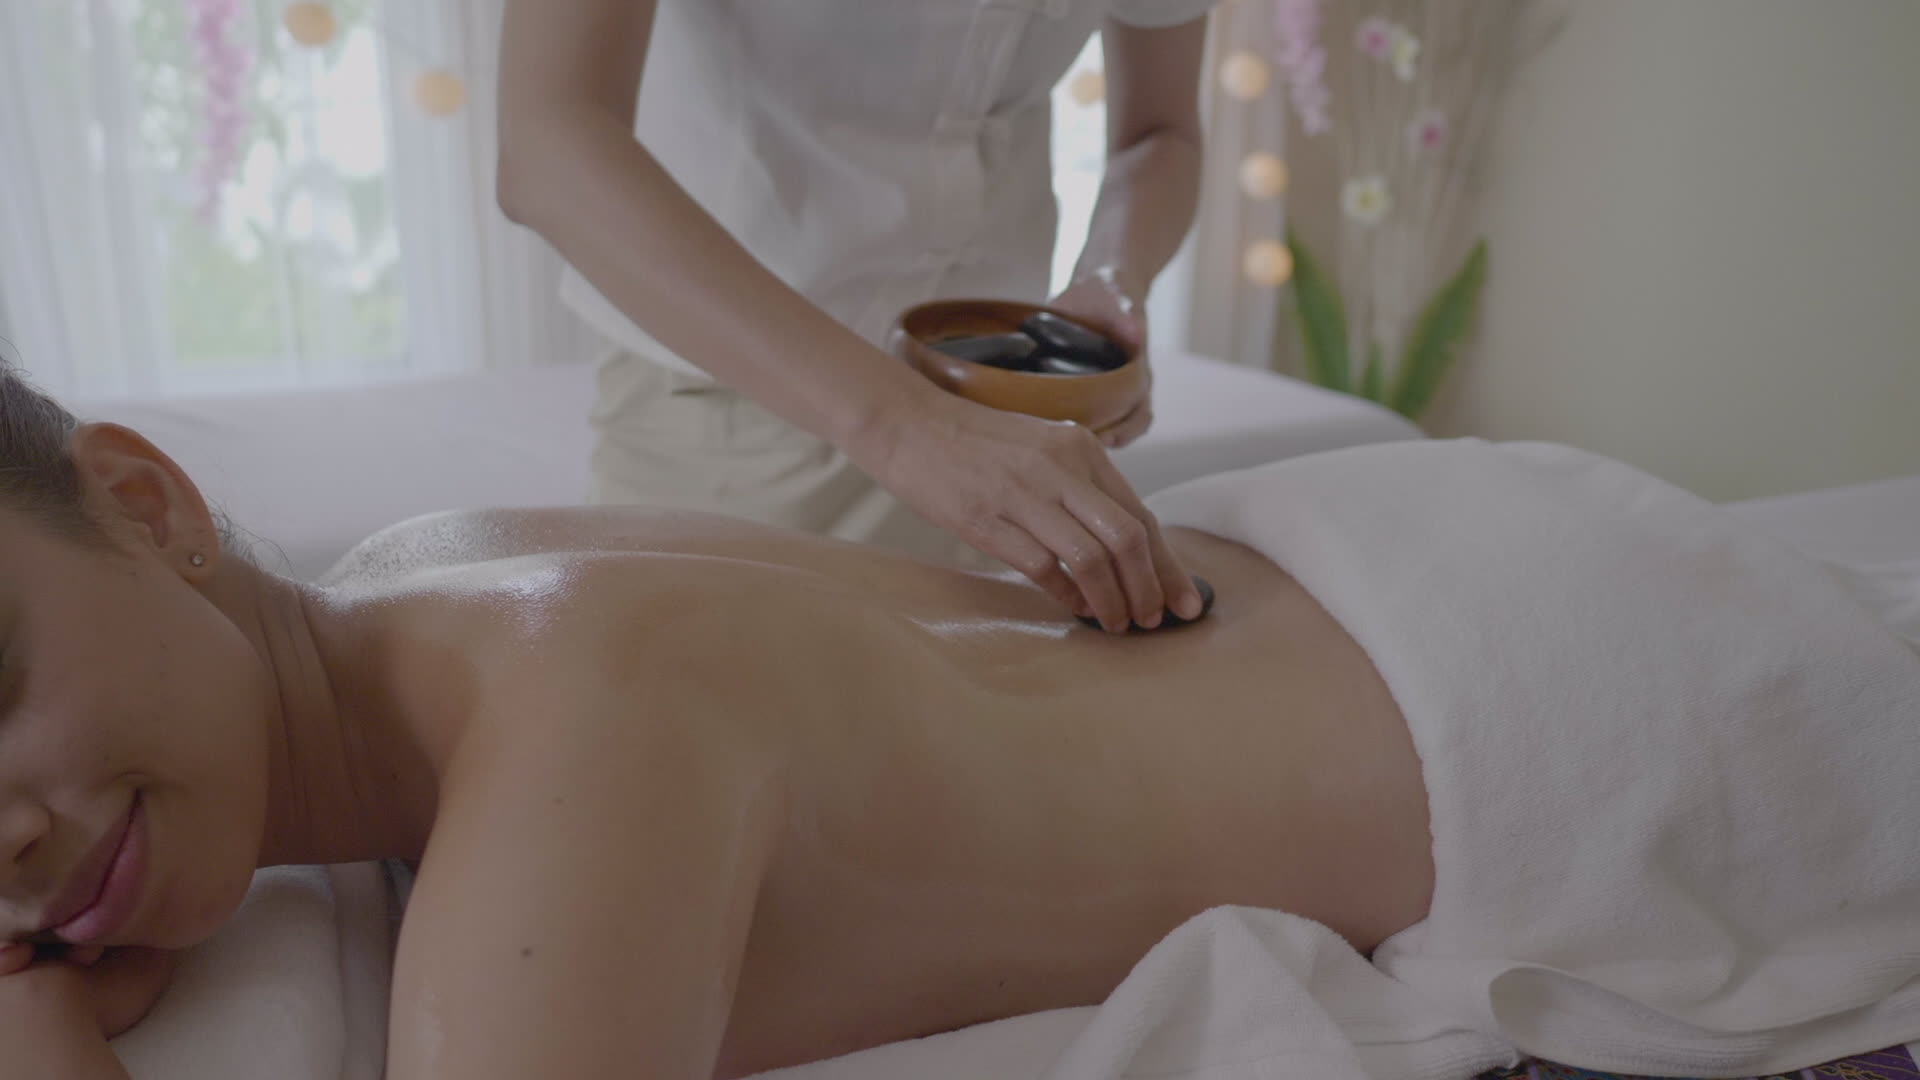 Hot massage video